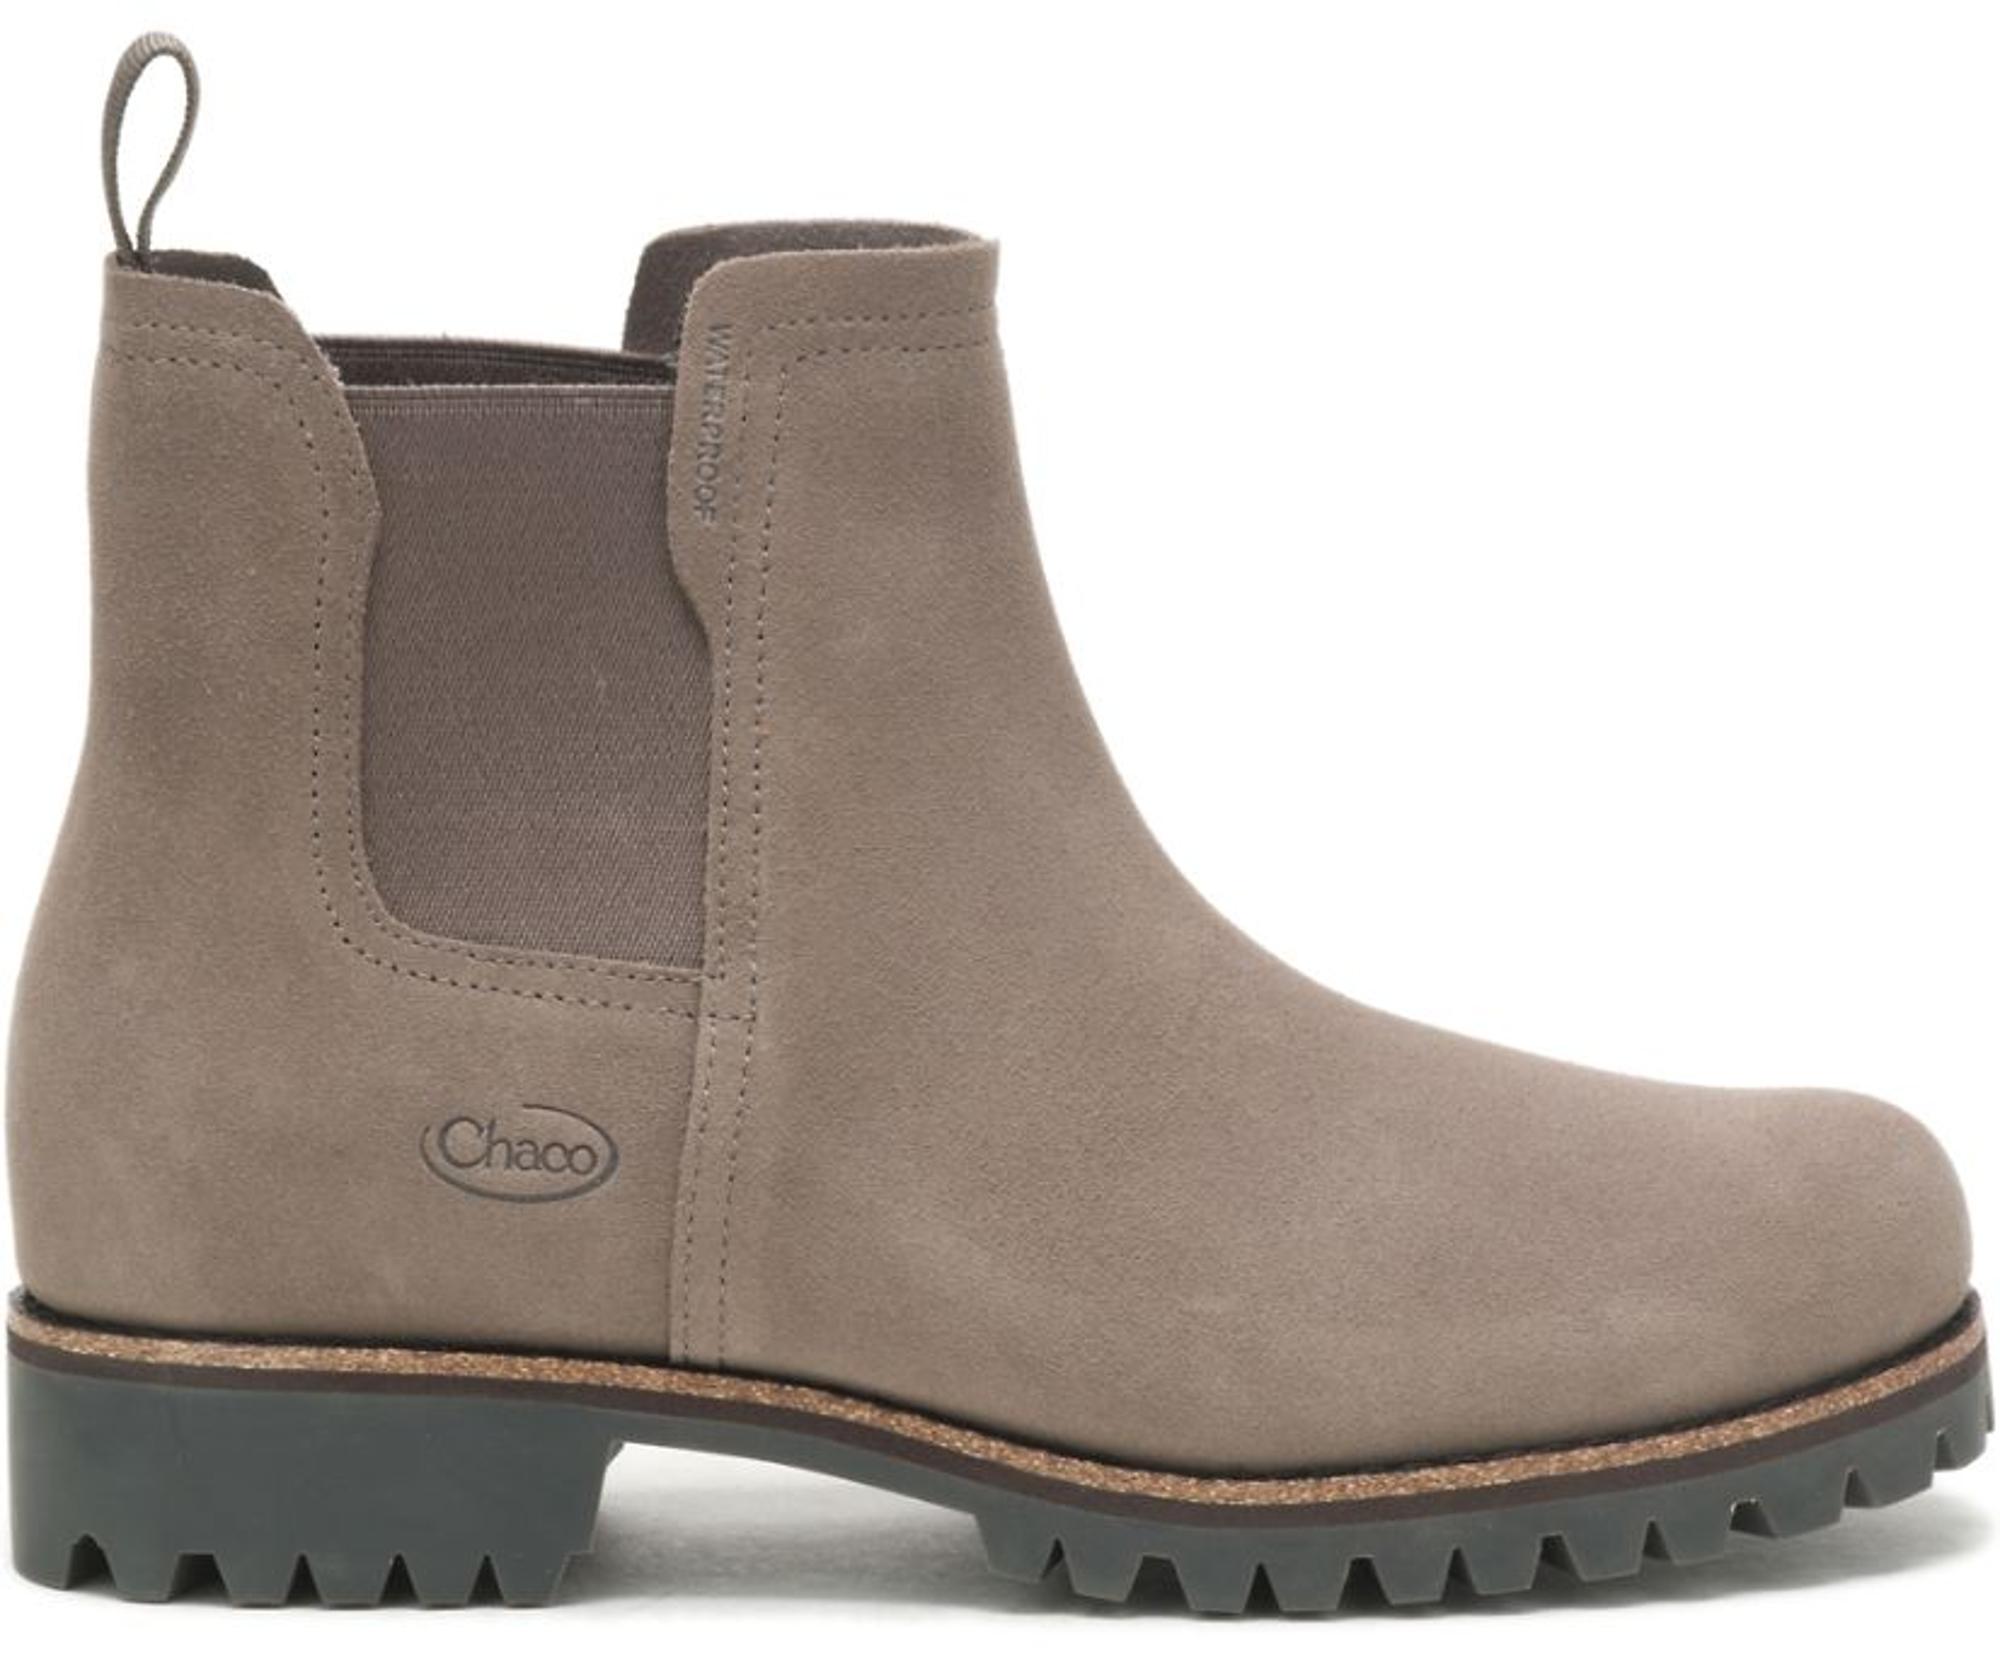 Fields Chelsea Waterproof Brown Suede Boots